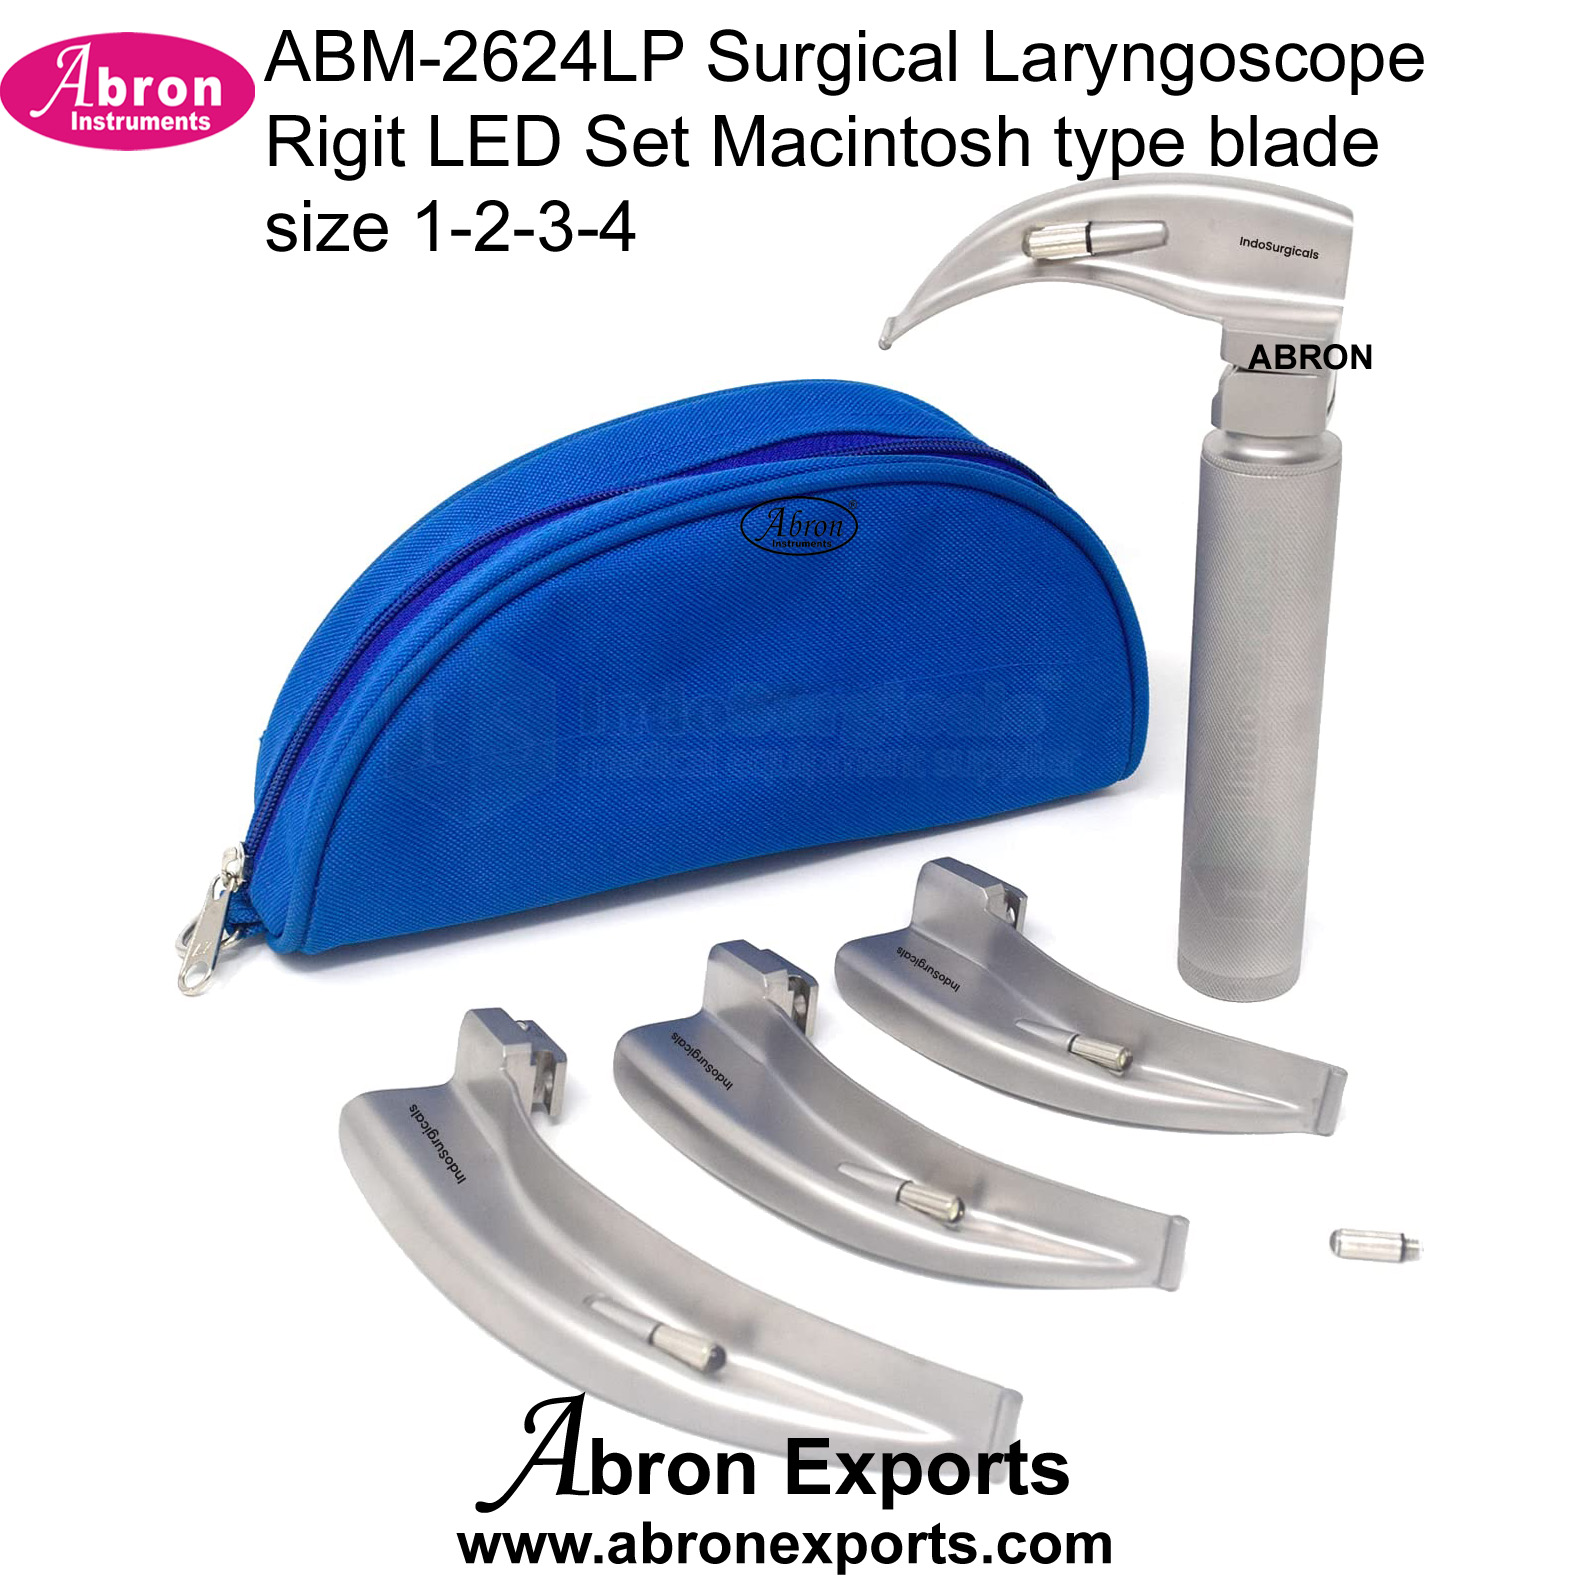 Macintosh type curved laryngoscope blades  Surgical Laryngoscope Rigit LED Set Size 1 2 3 4 Abron ABM-2624LP